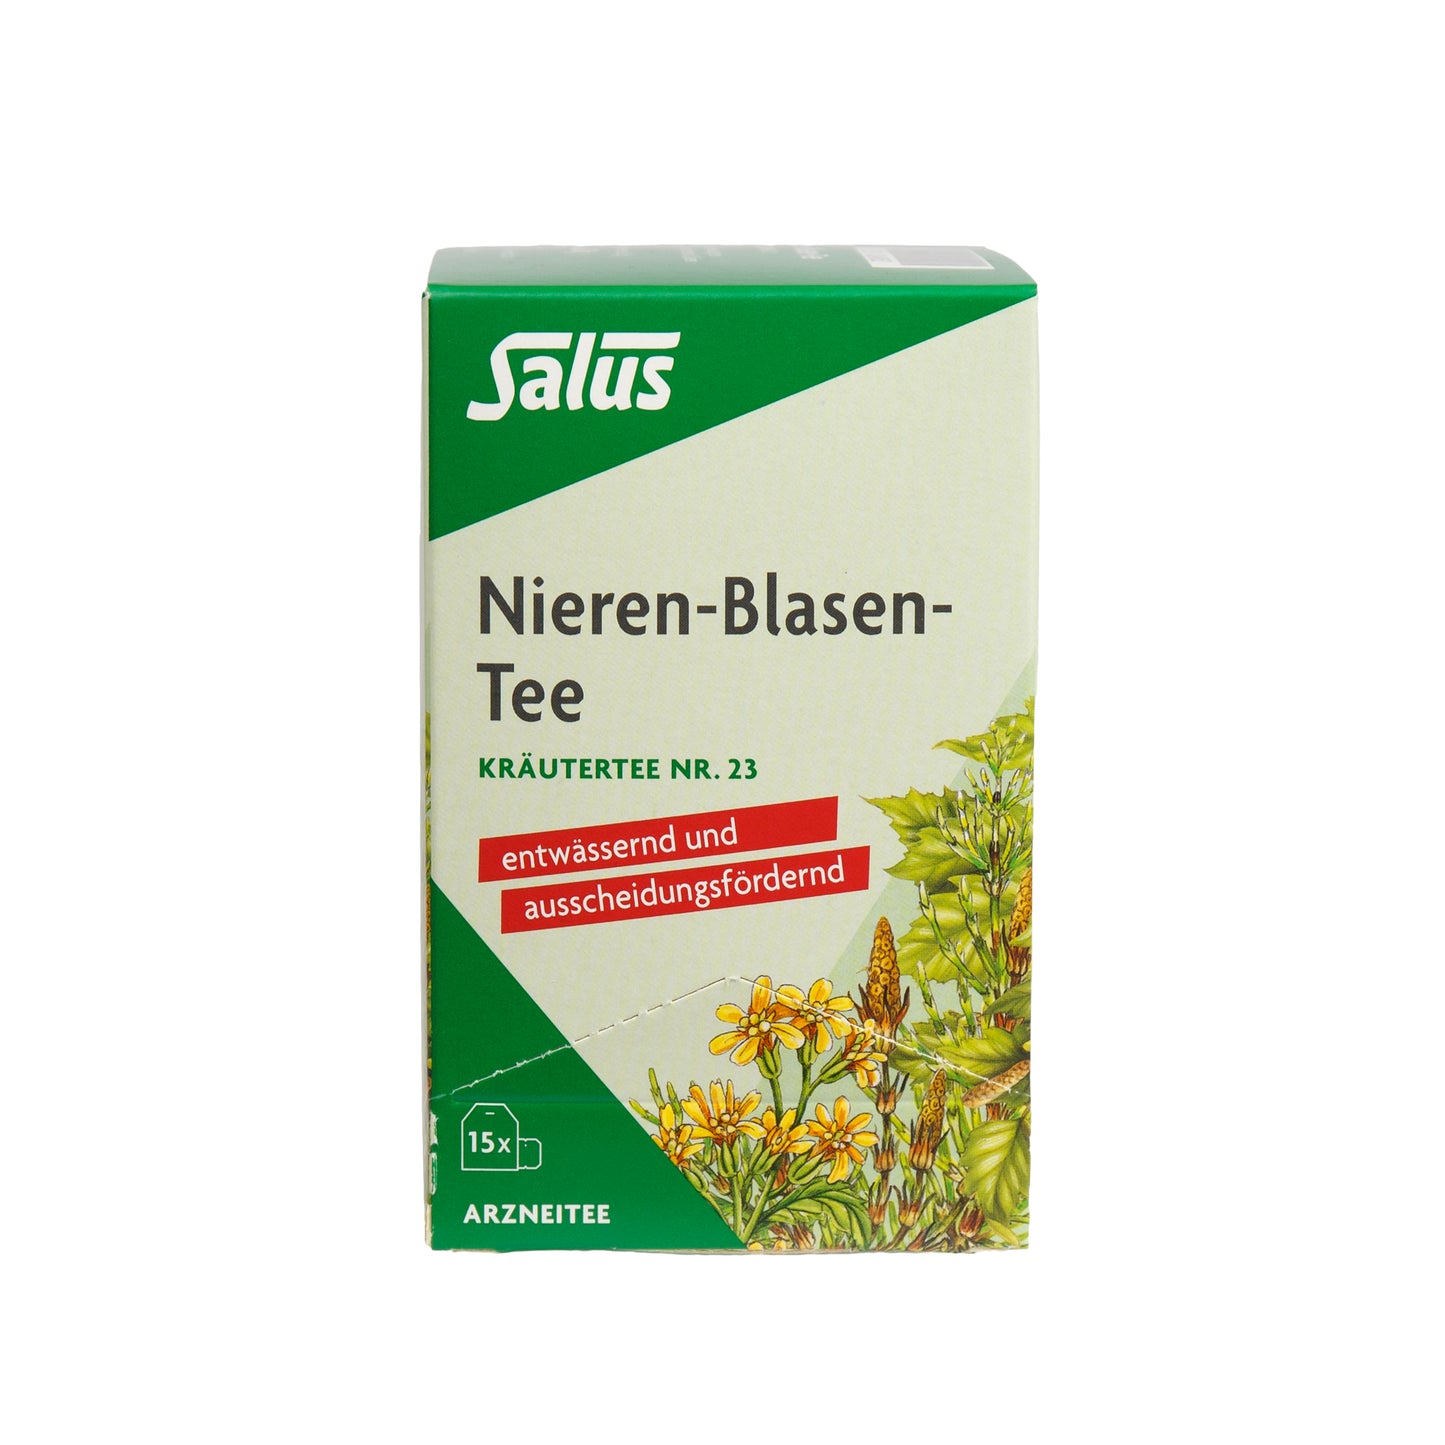 Alternate Image of Nieren-Blasentee #23 Bags